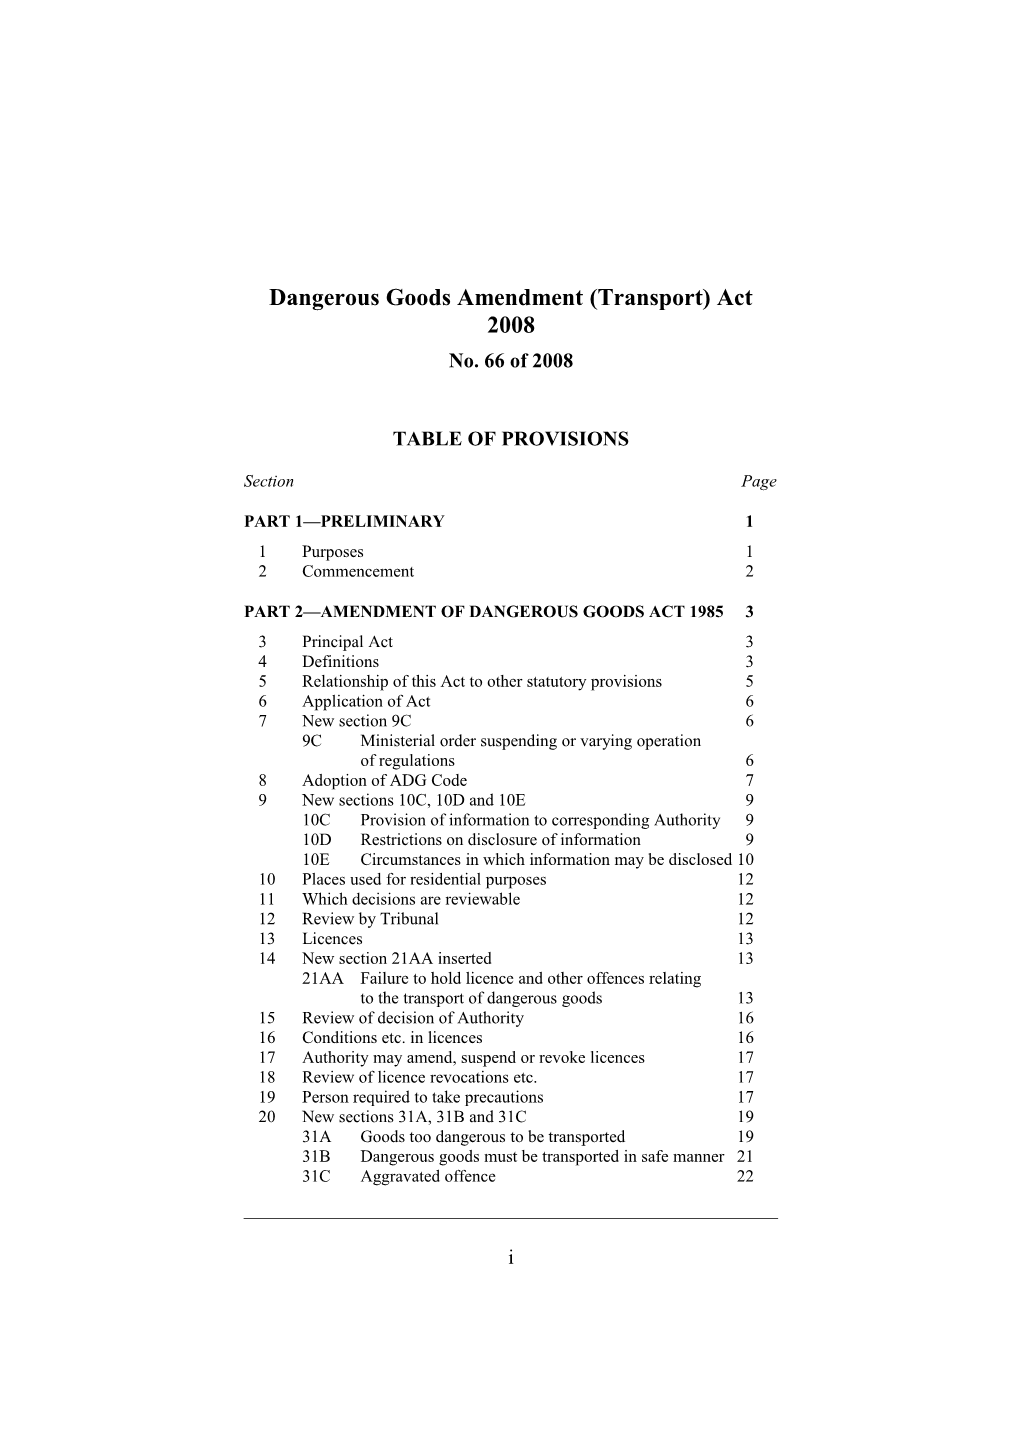 Dangerous Goods Amendment (Transport) Act 2008